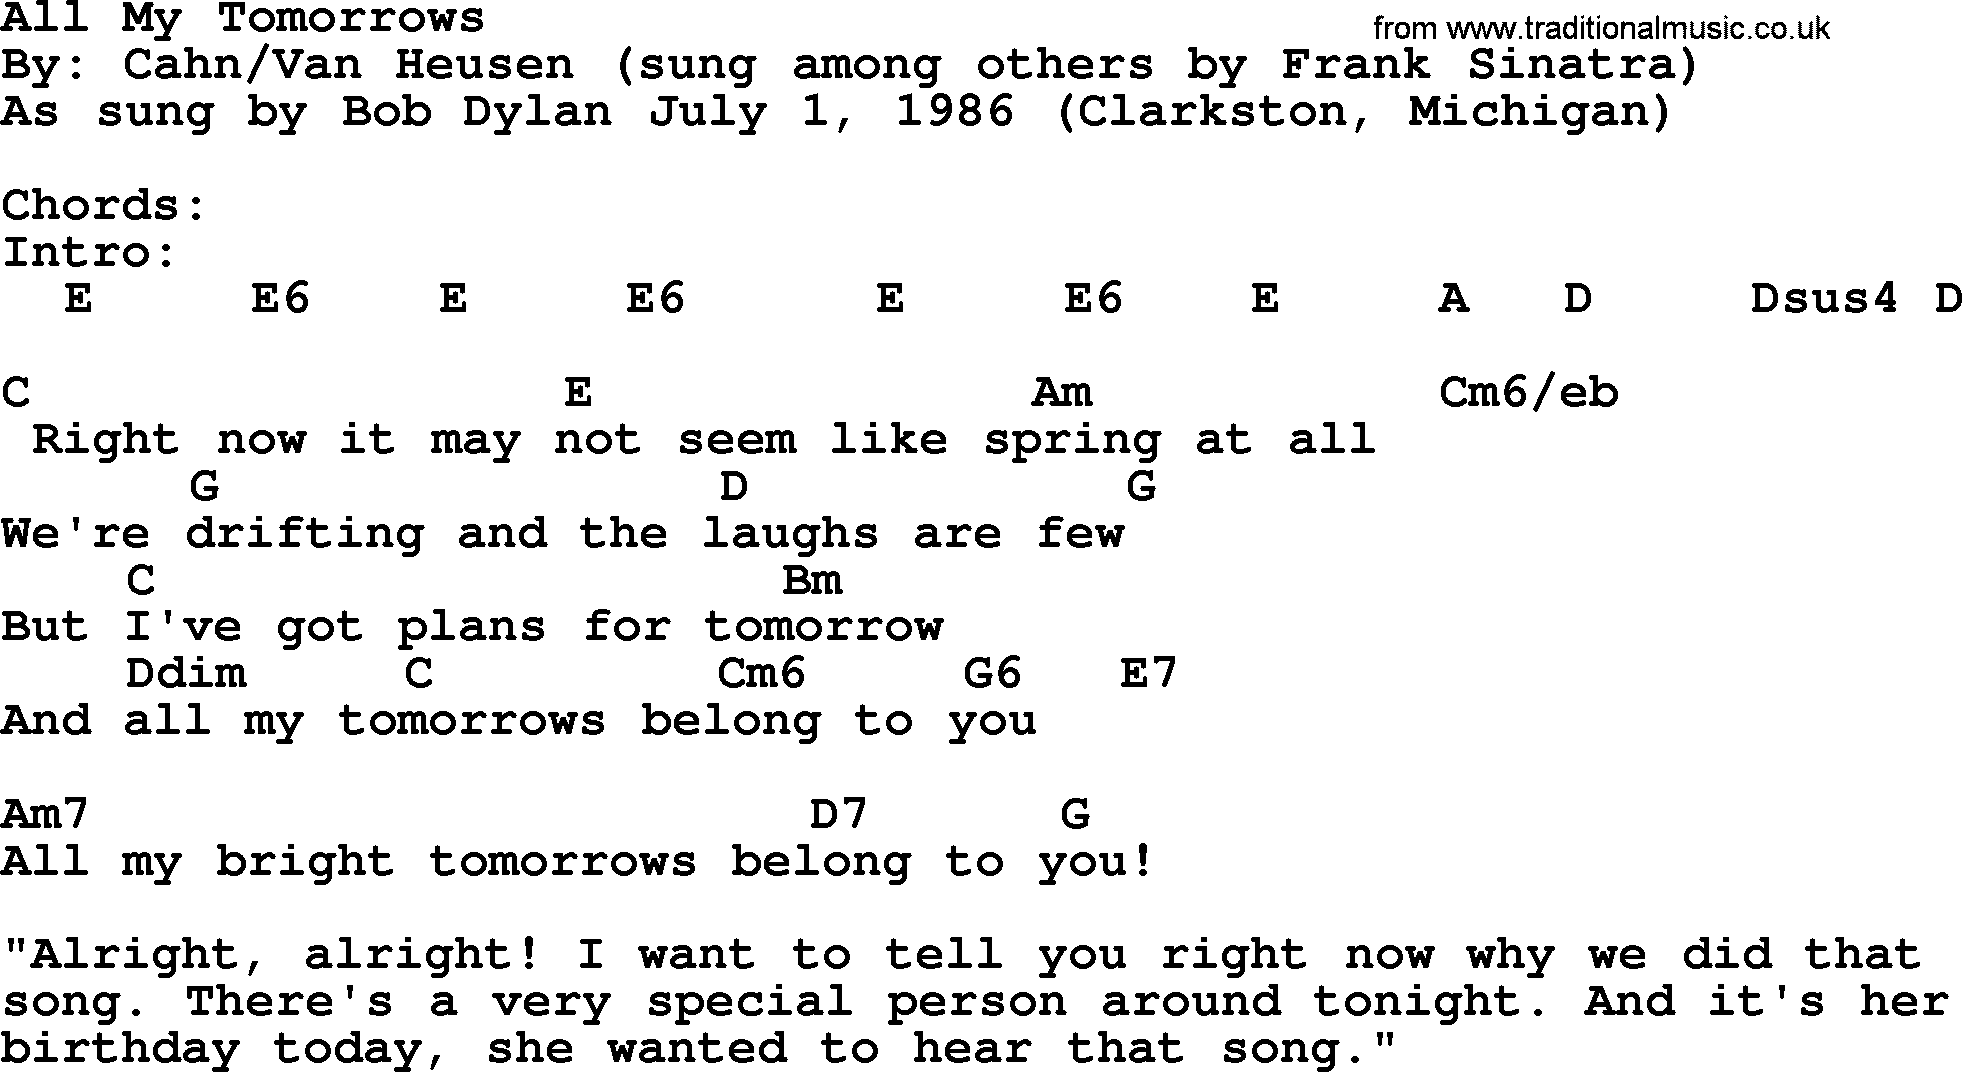 Bob Dylan song, lyrics with chords - All My Tomorrows